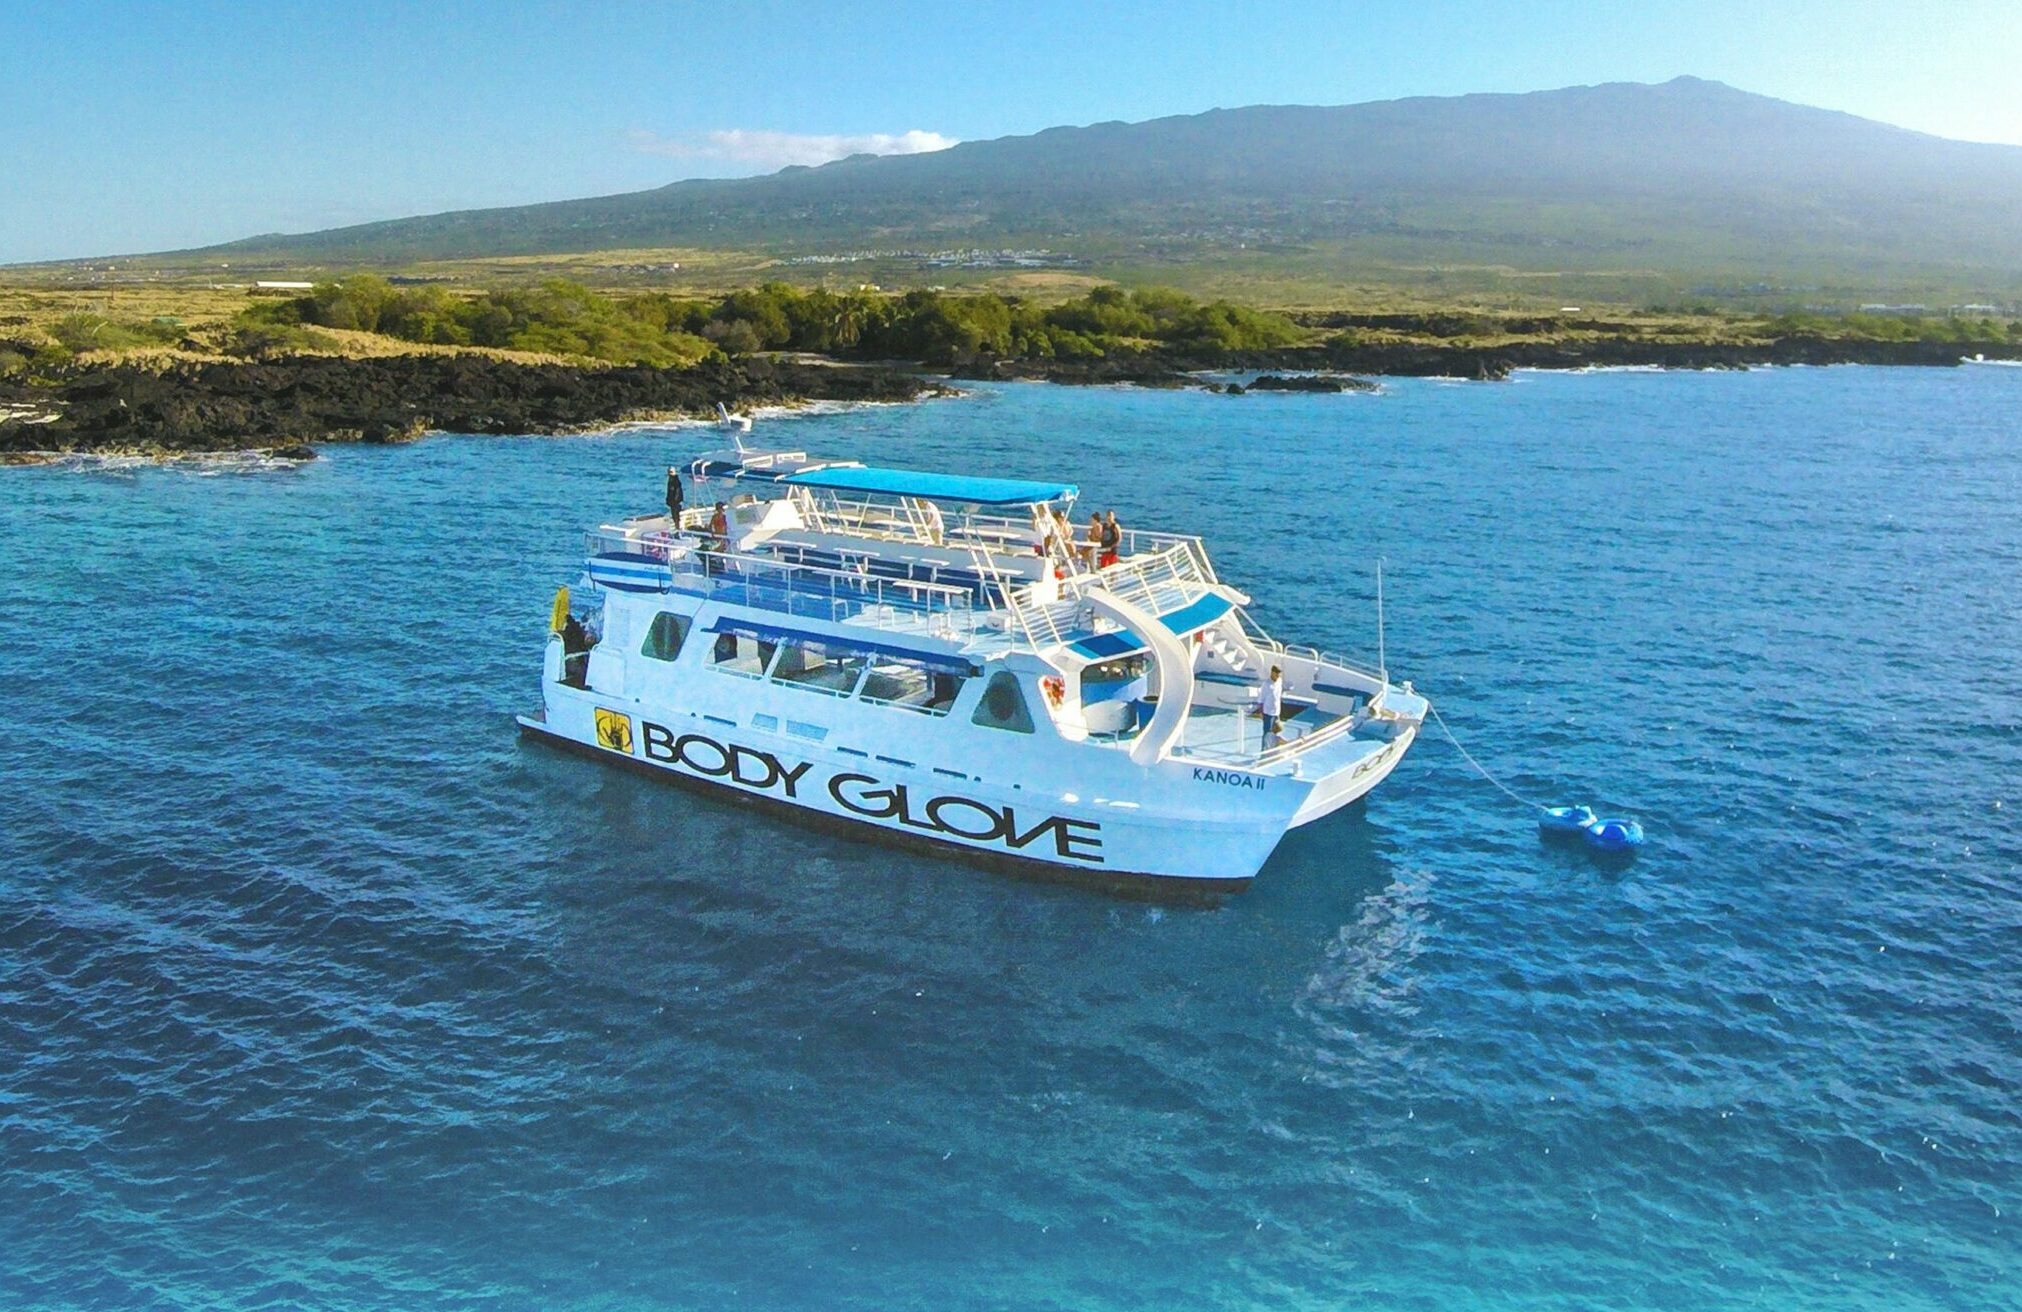 Body Glove catamaran ready for a cruise in the waters off Kailua-Kona